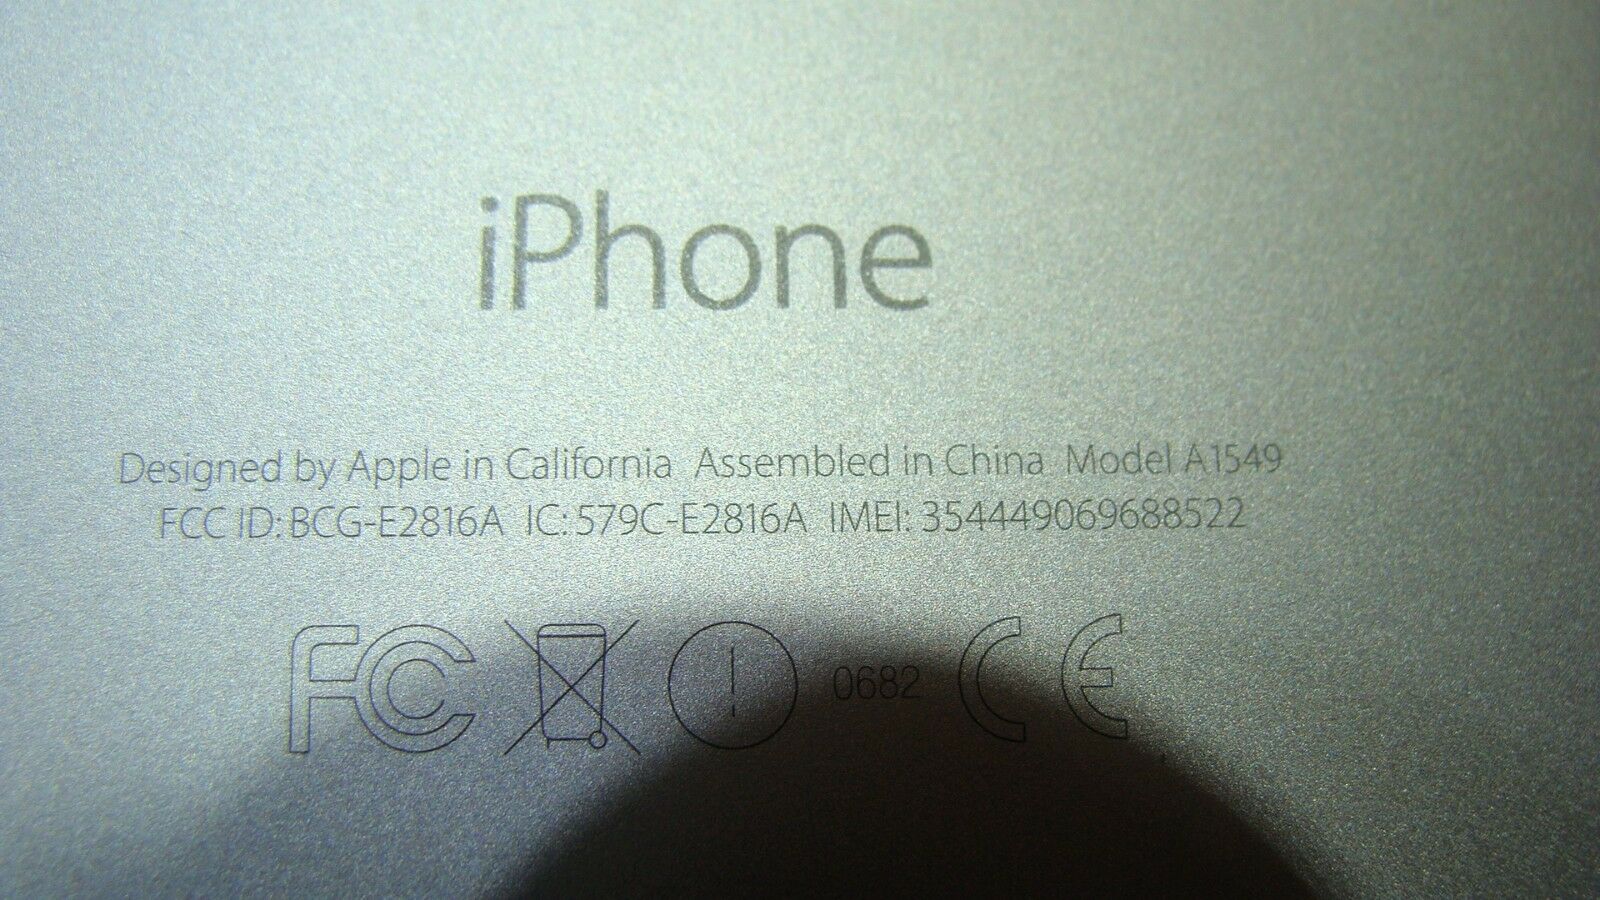 iPhone 6 A1549 MG5W2LL/A Late 2014 4.7